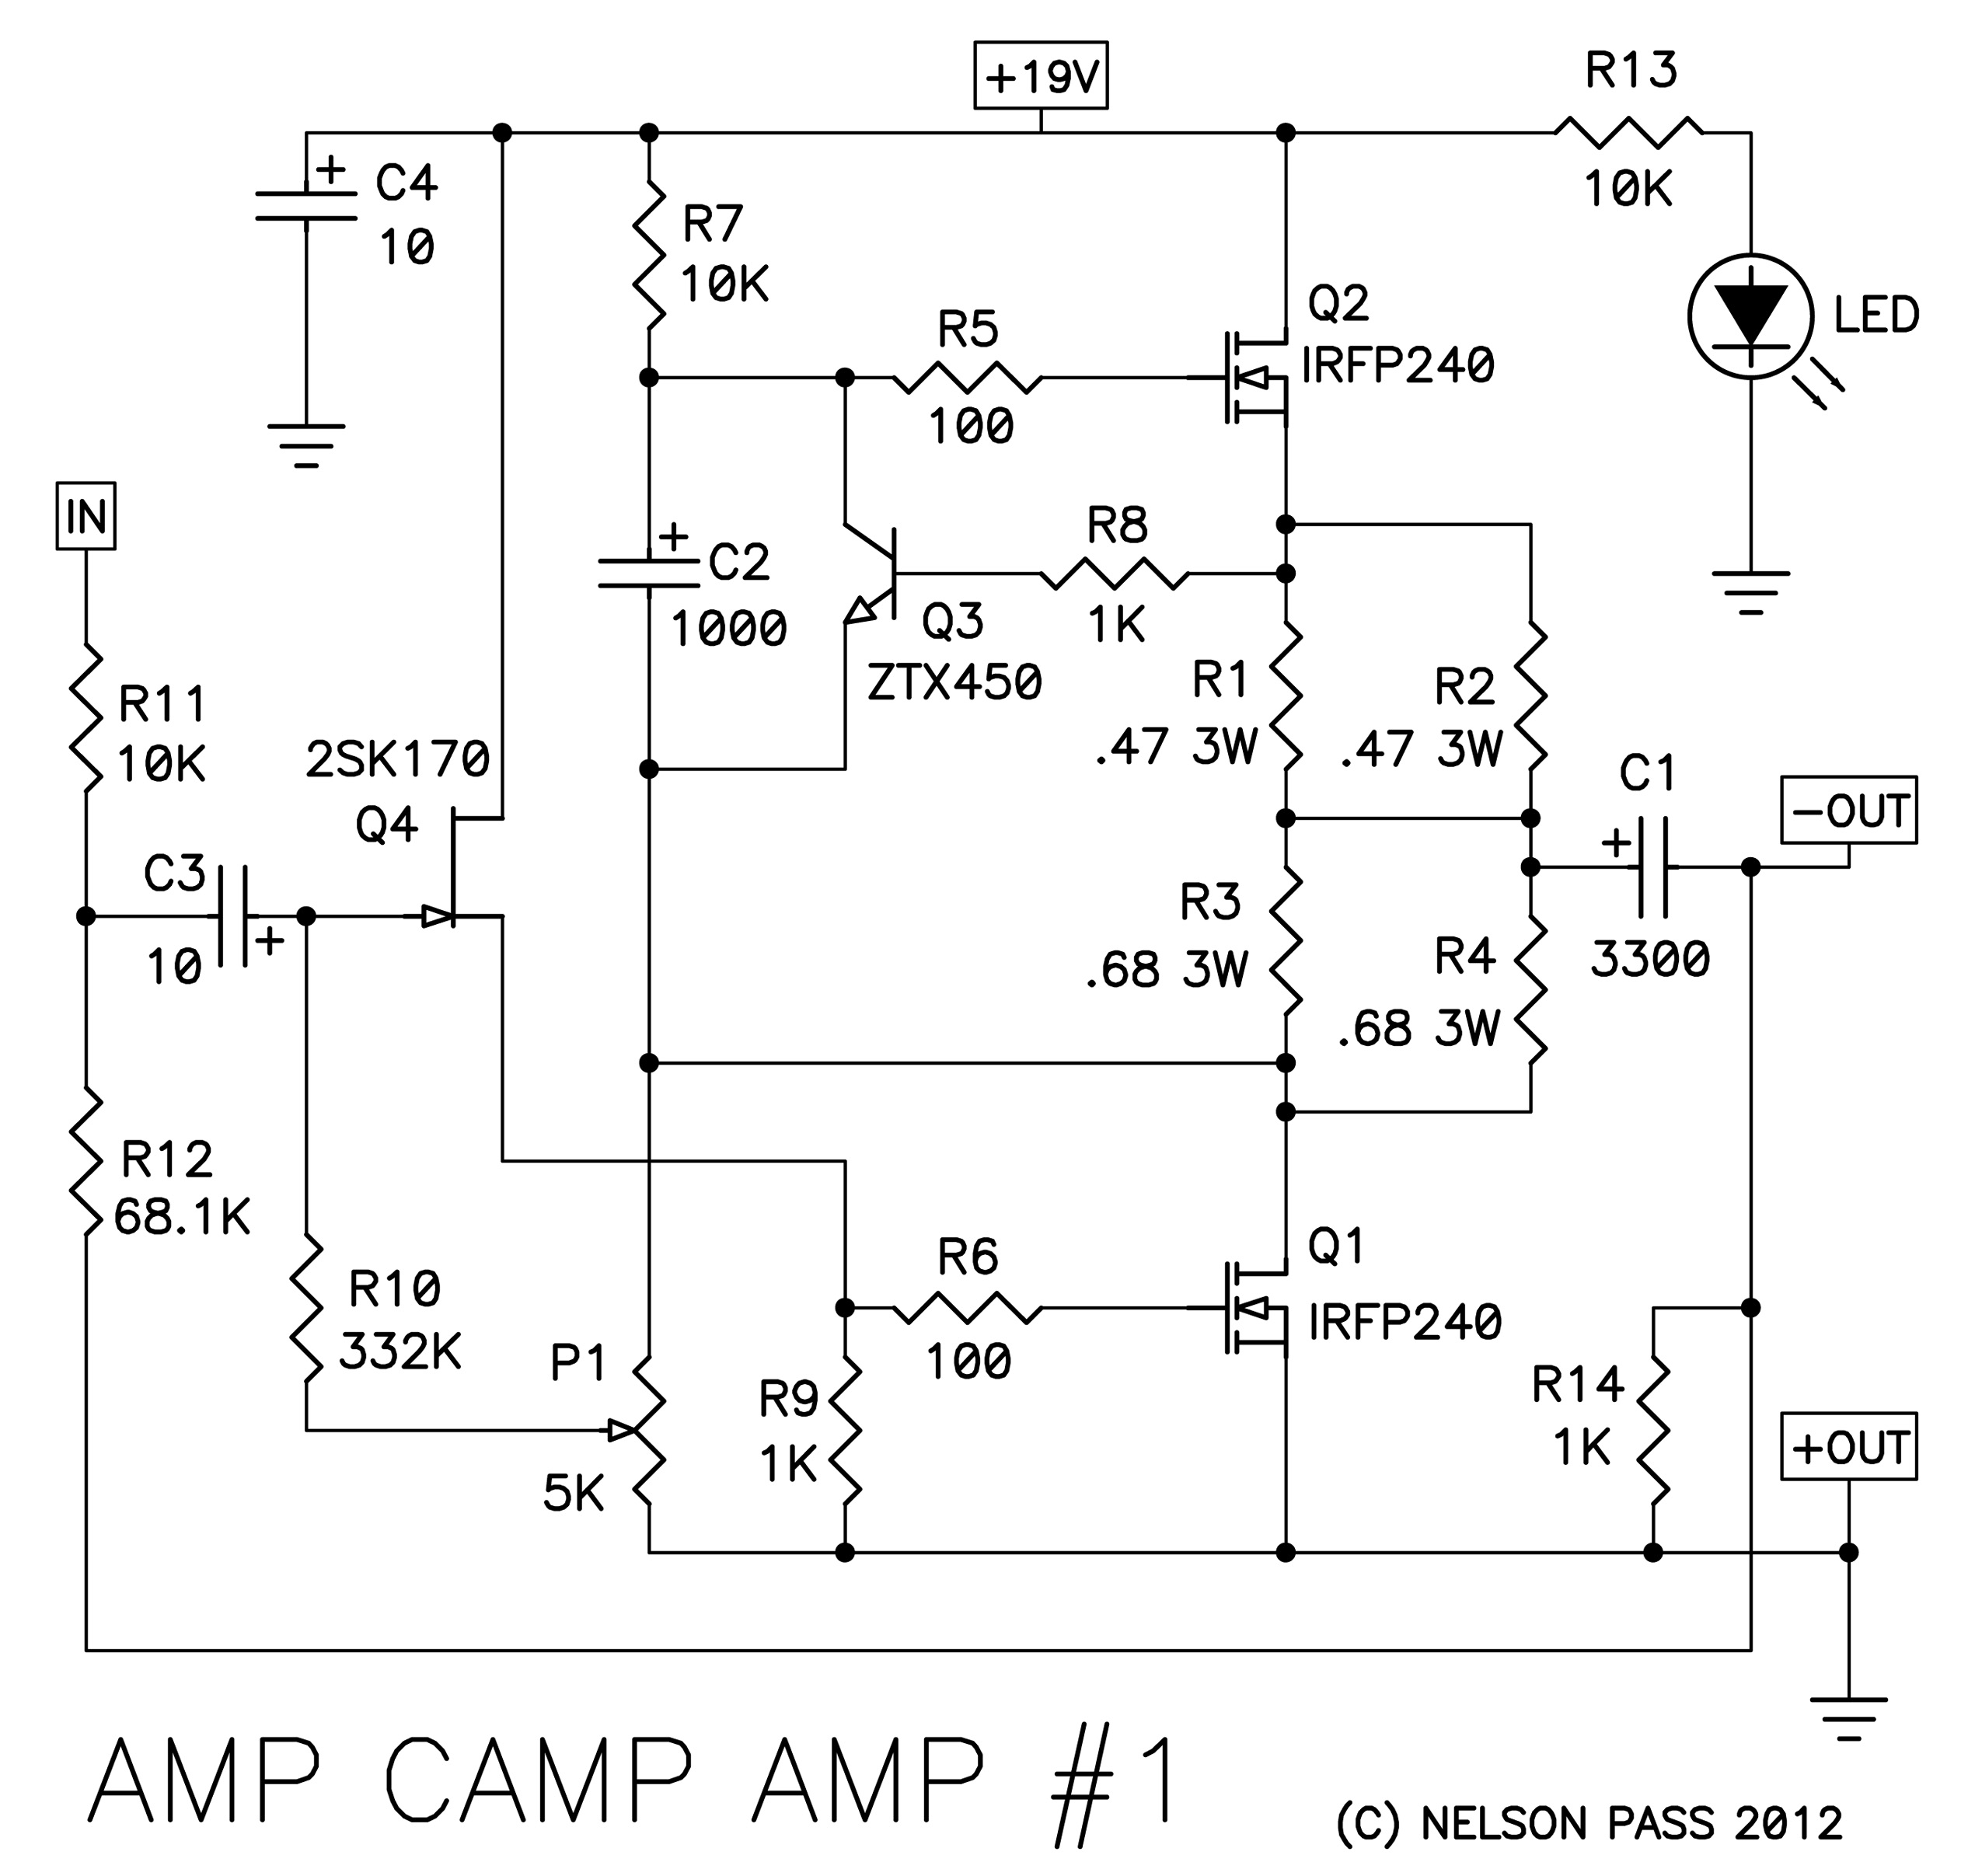 ampcamp1_sch.png